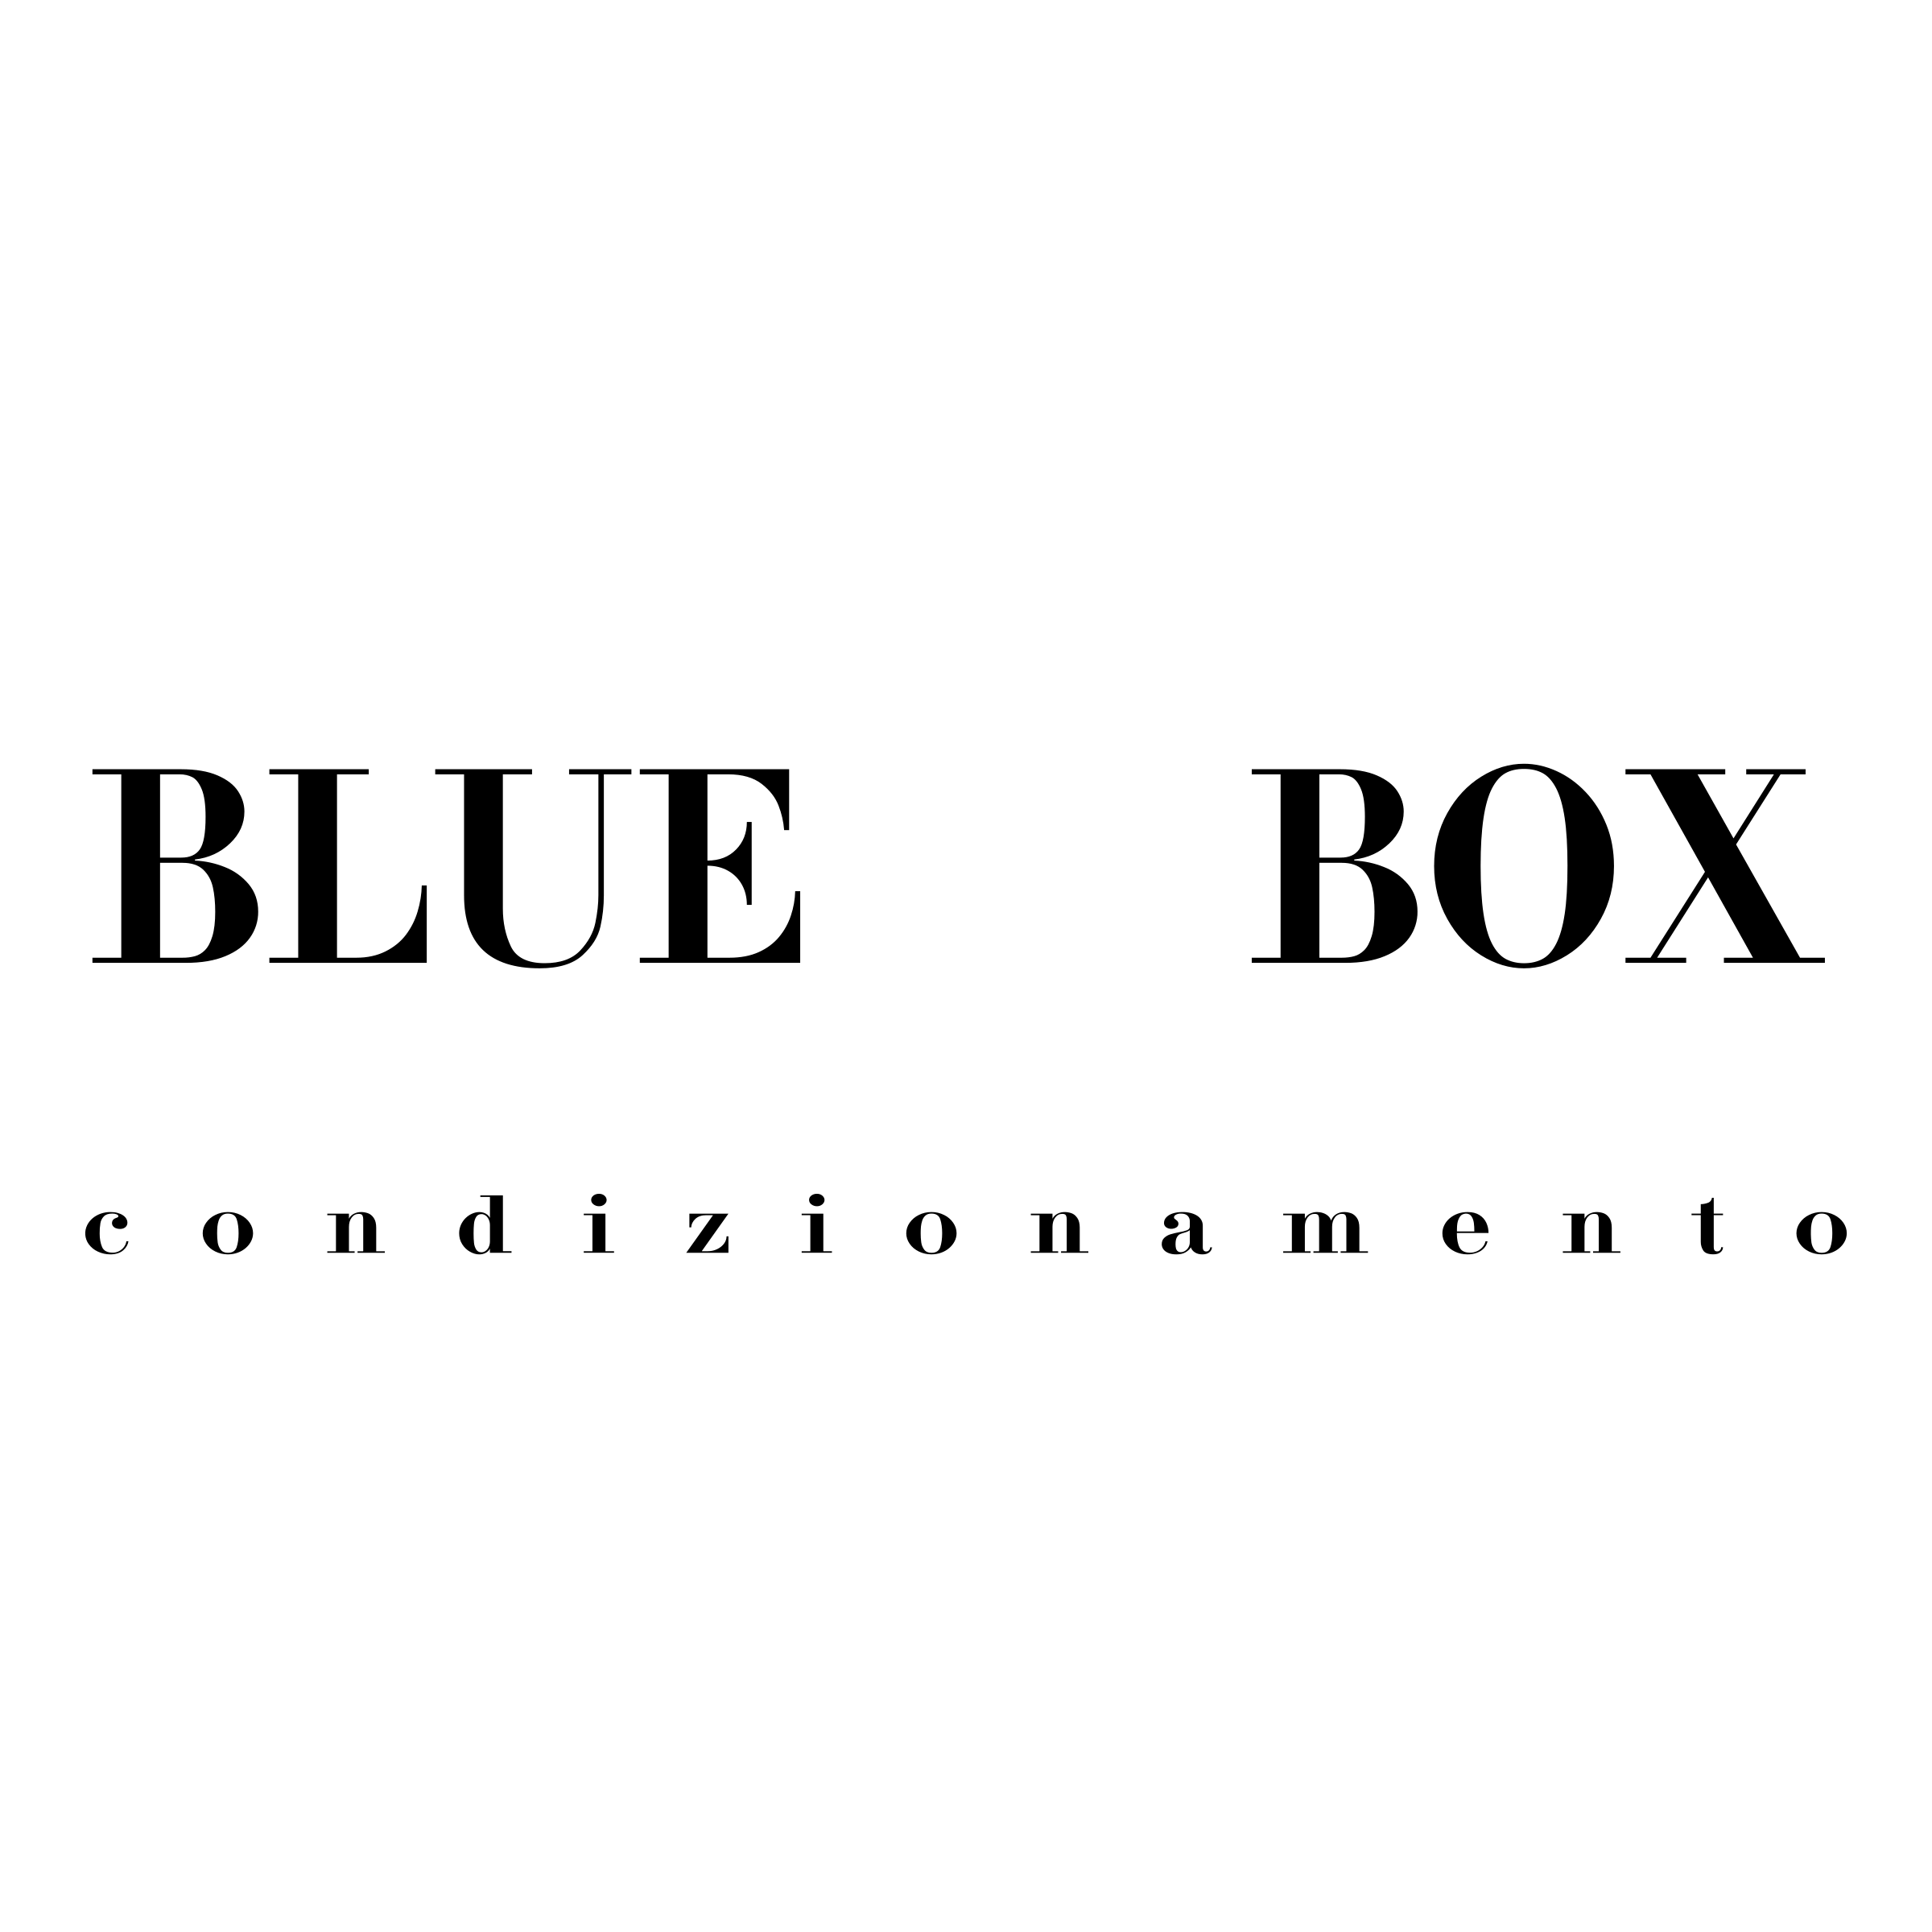 Blue and White Box Logo - Blue Box Logo PNG Transparent & SVG Vector - Freebie Supply